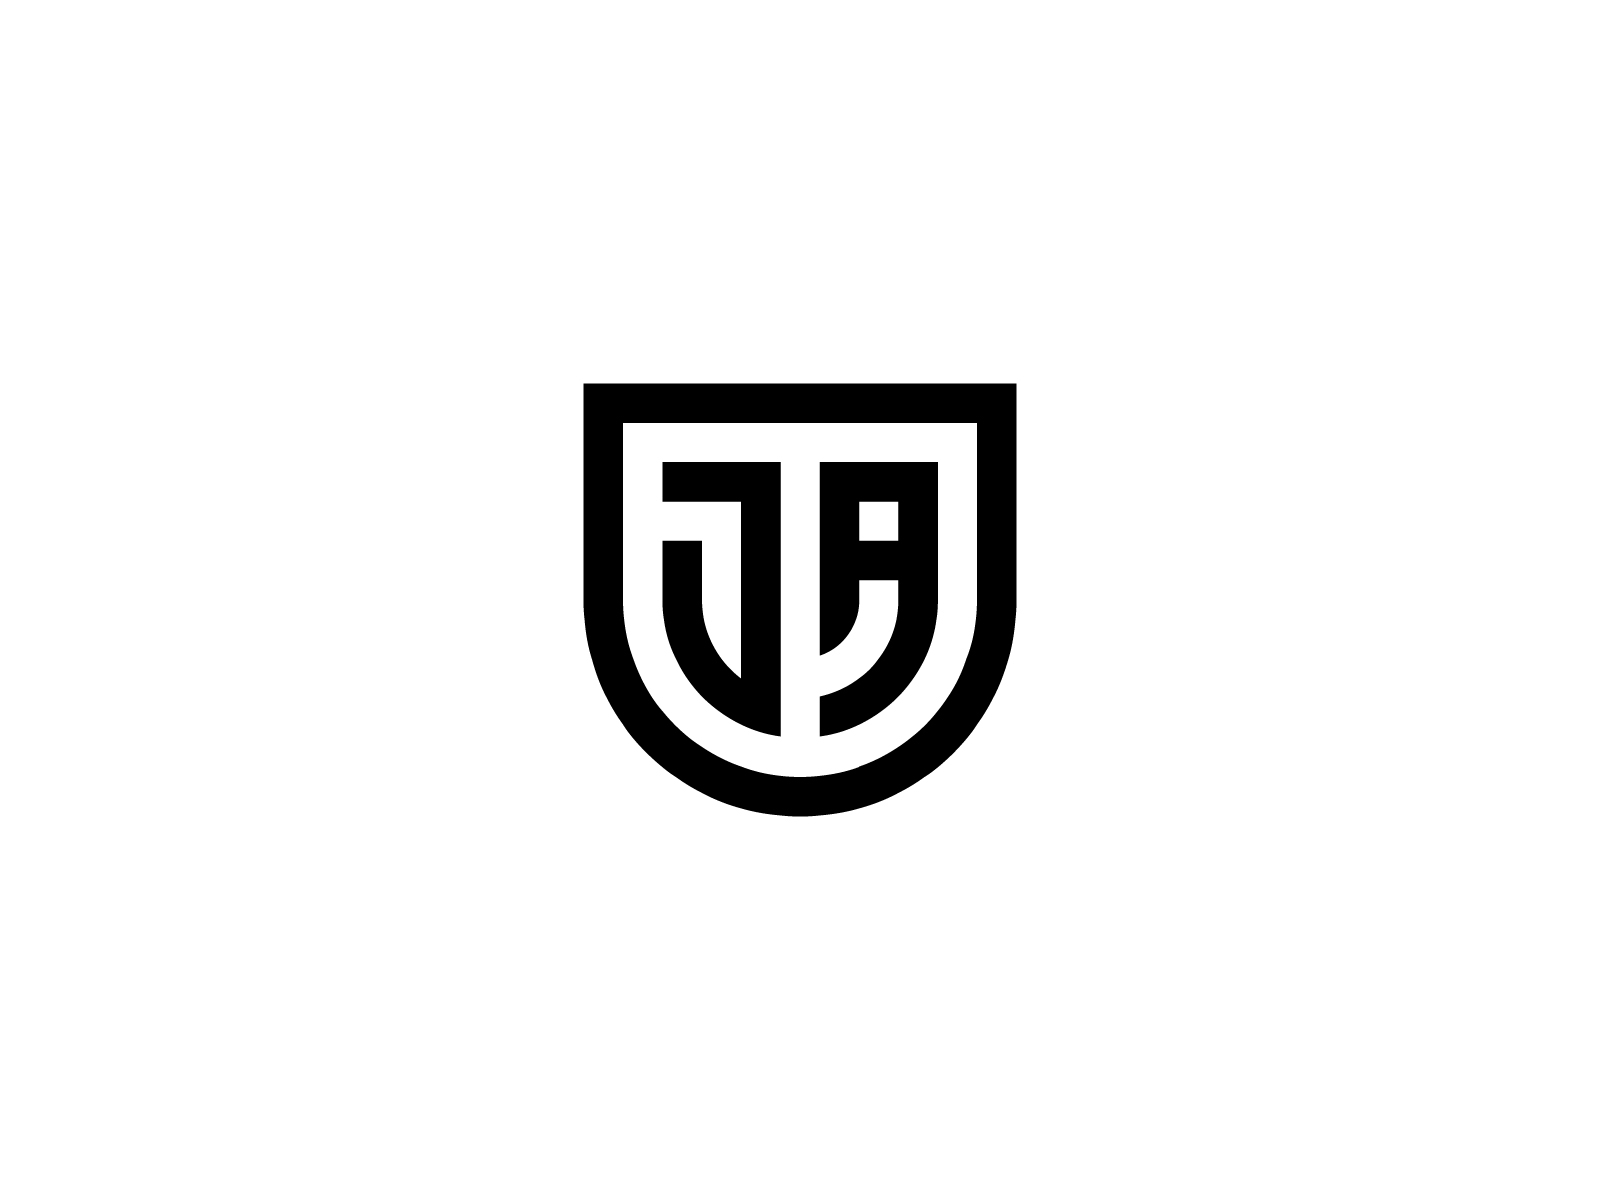 Ja logo design Black and White Stock Photos & Images - Alamy